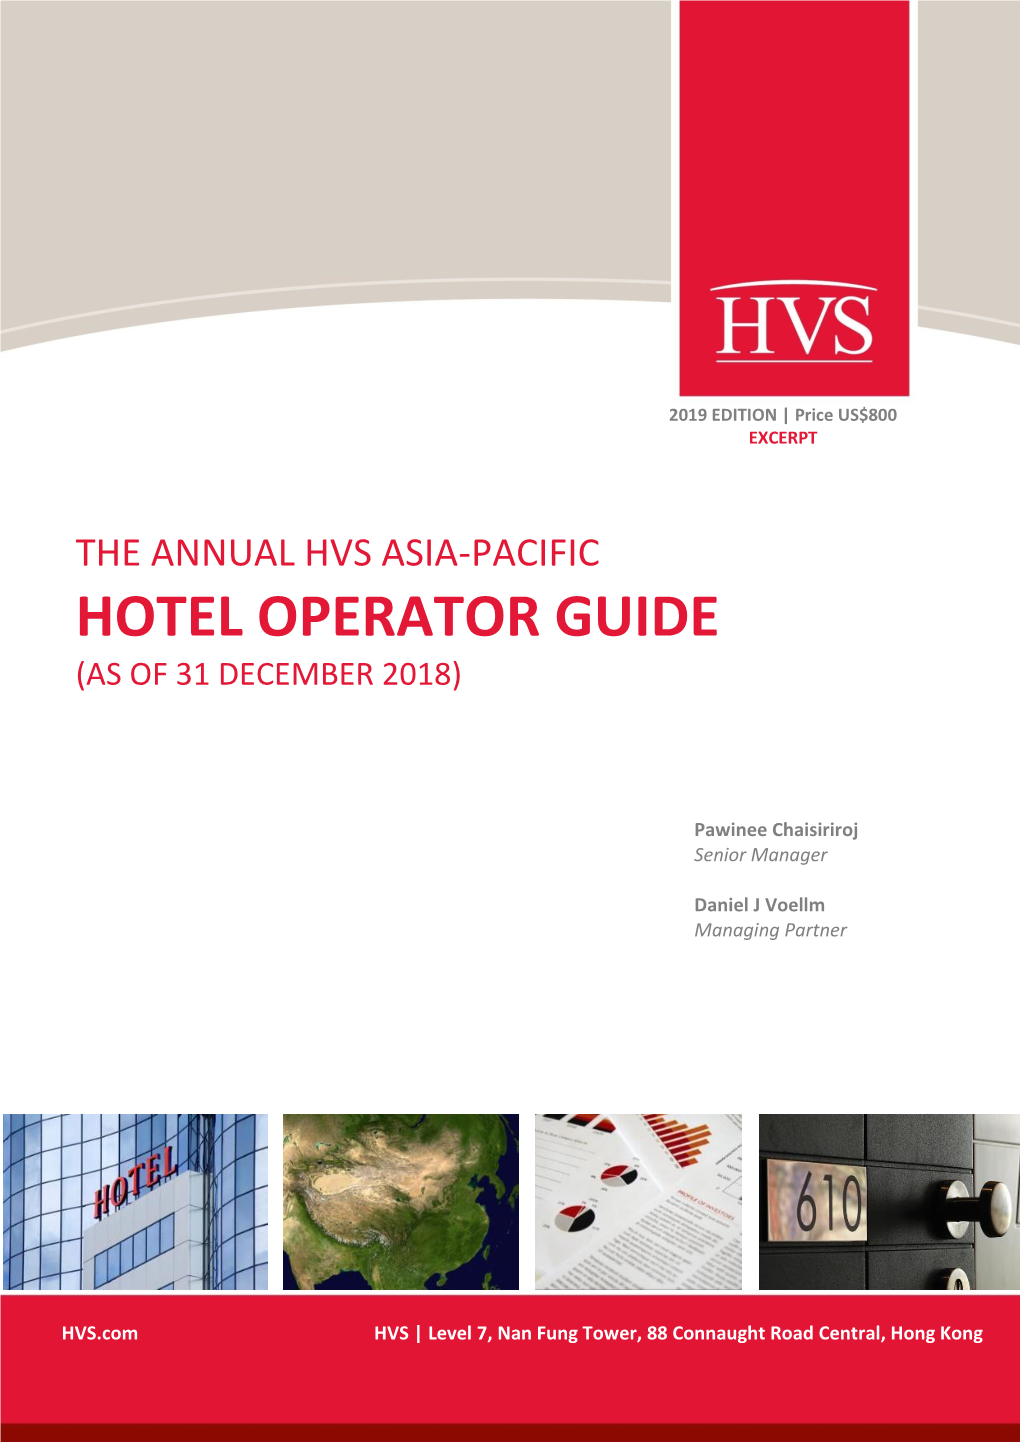 The Annual HVS Asia-Pacific Hotel Operator Guide 2019